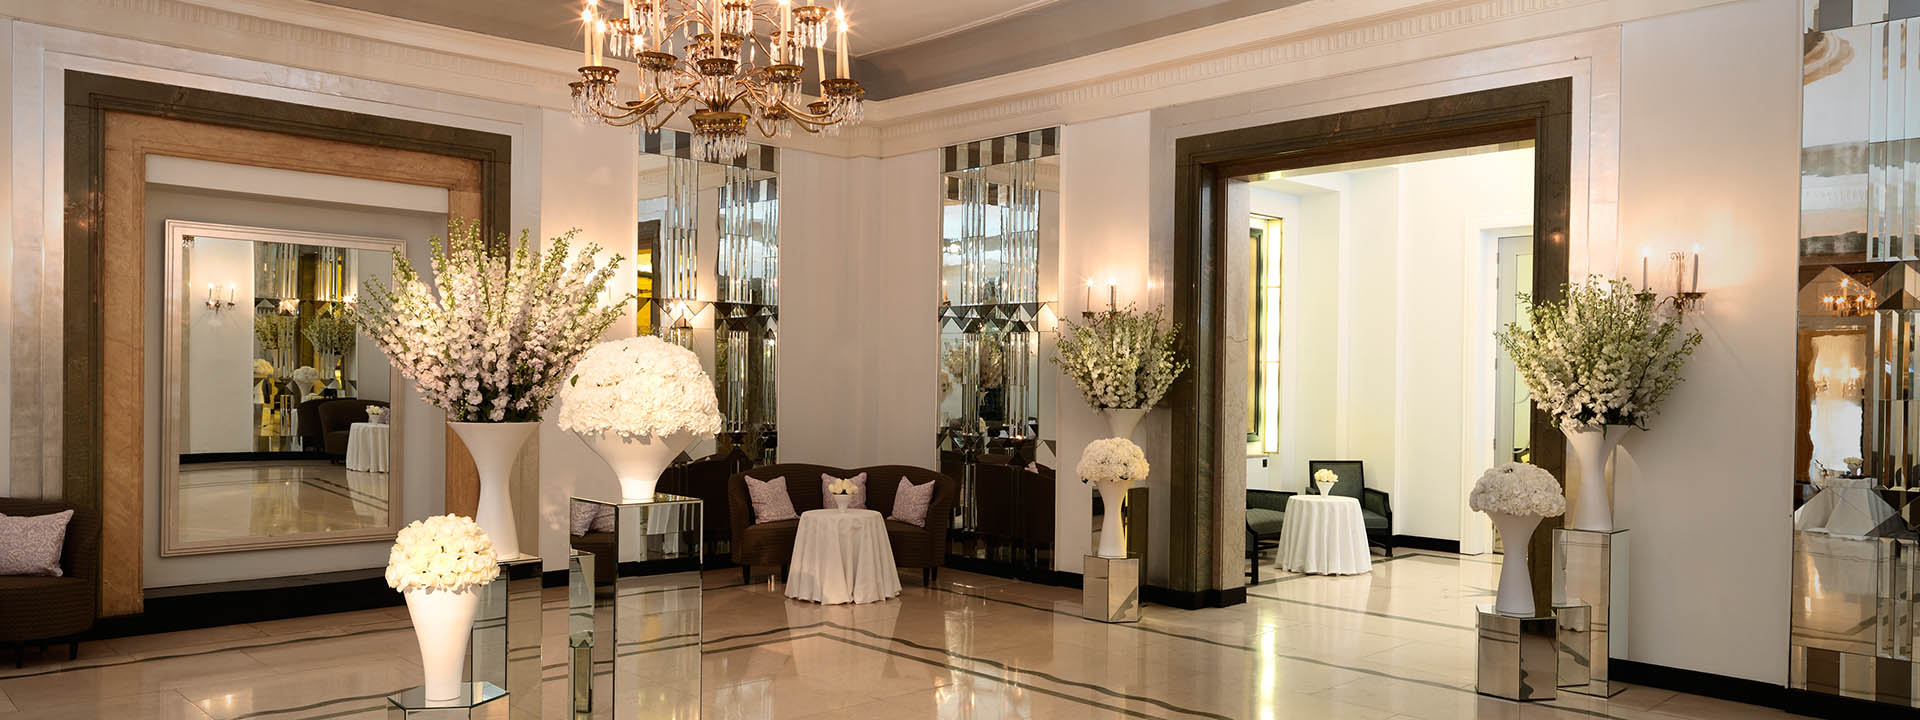 Ballroom Reception: Luxury Event Spaces London - Claridge's